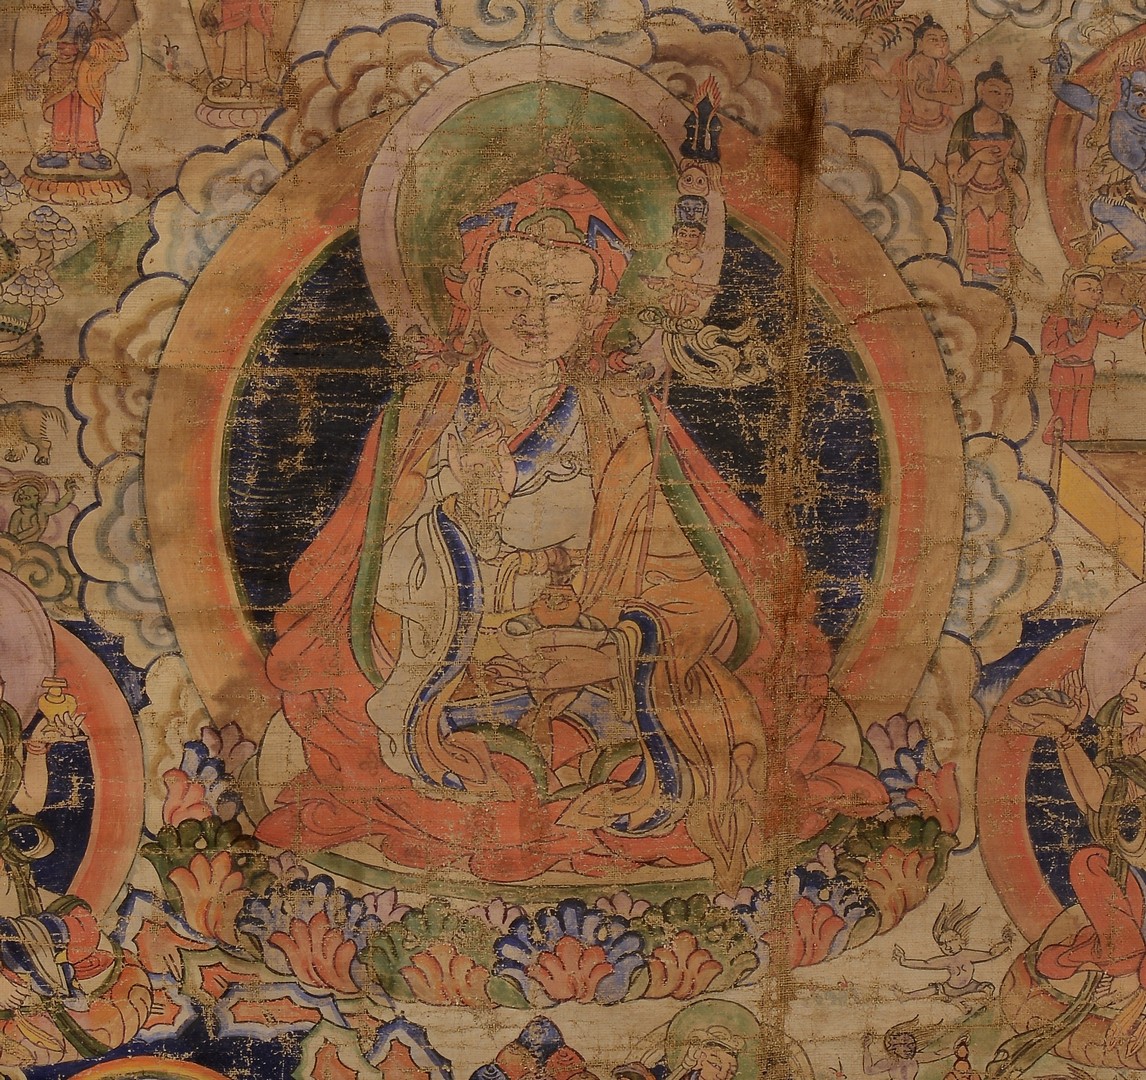 Lot 13: Tibetan Thangka, late 1700s